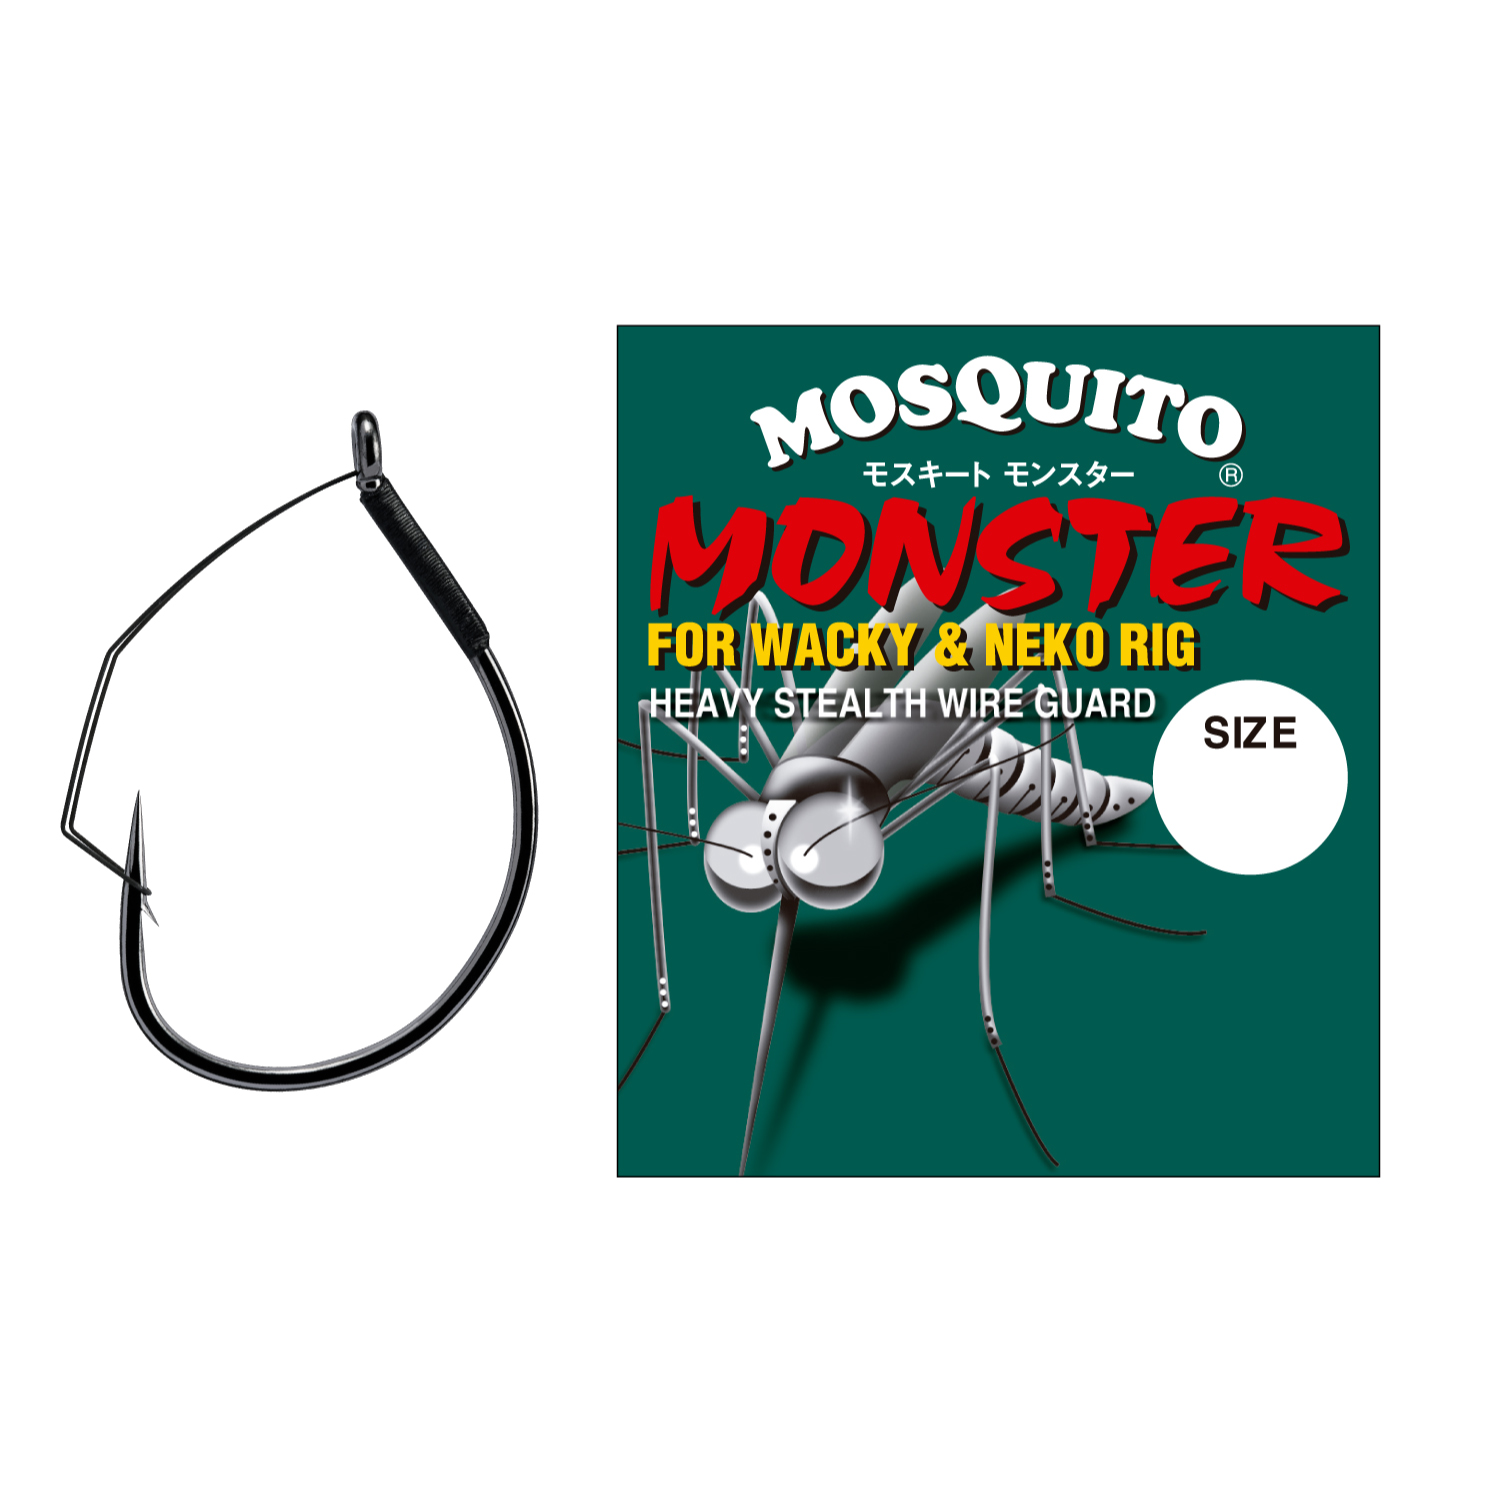 Mouquito Monster (FOR WACKY ＆ UNDERSHOT RIG)